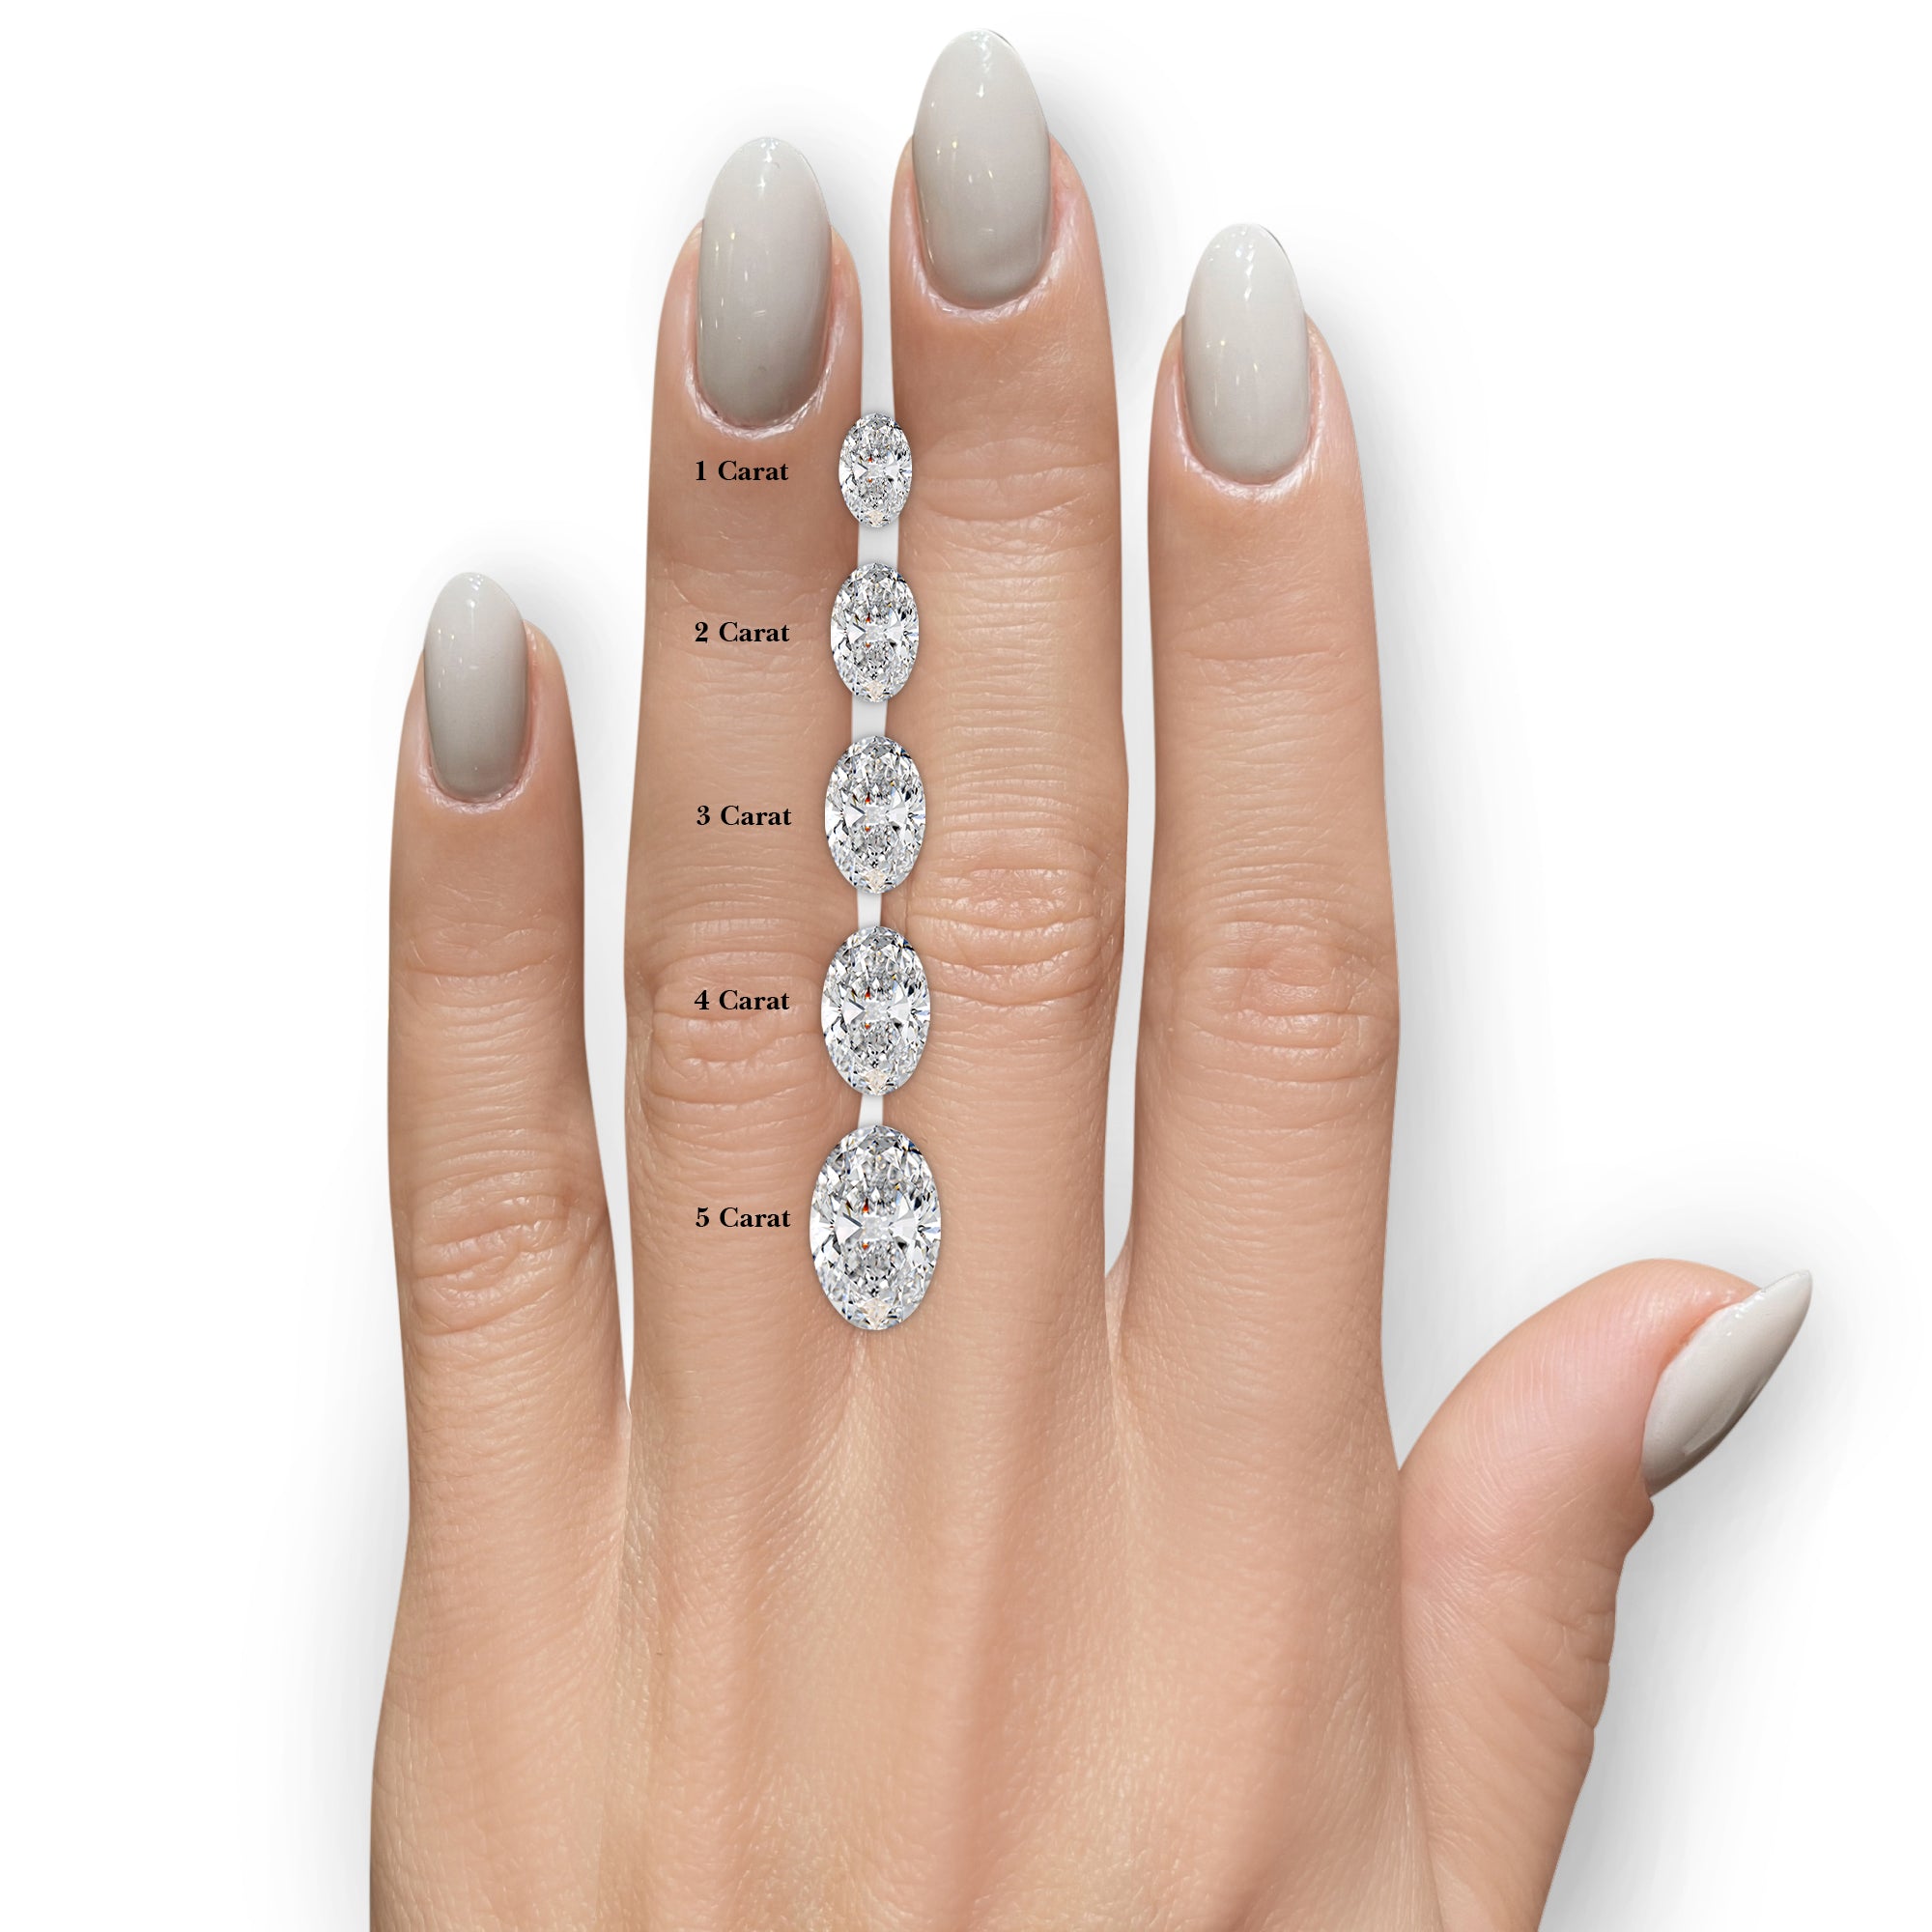 Amelia Diamond Engagement Ring -18K White Gold